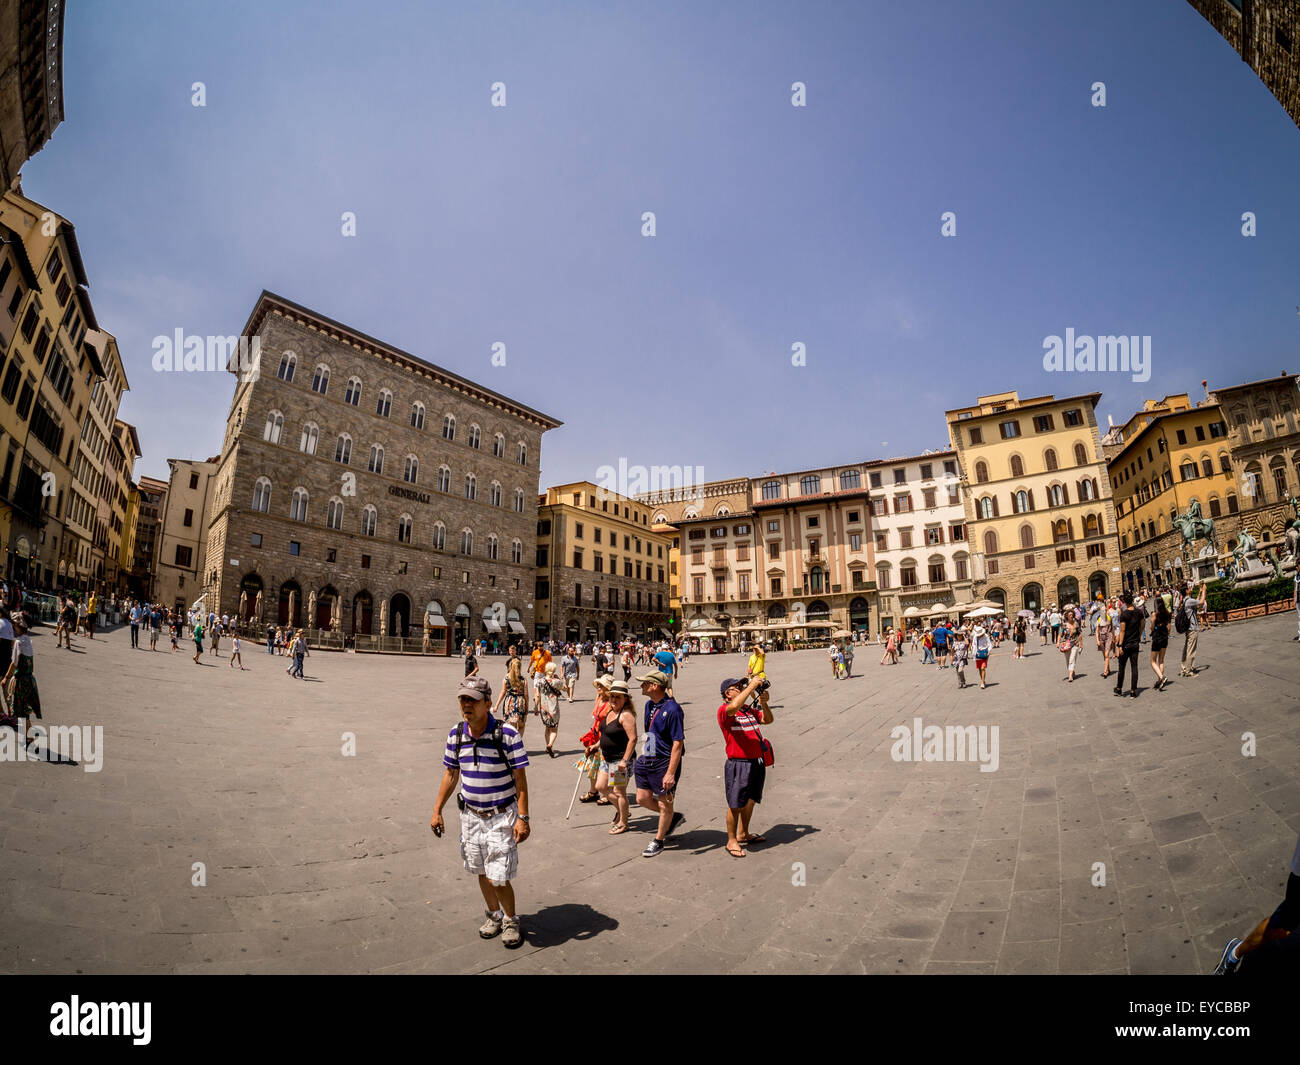 Fisheye lens shot of Piazza della Signoria, Florence, Italy Stock Photo